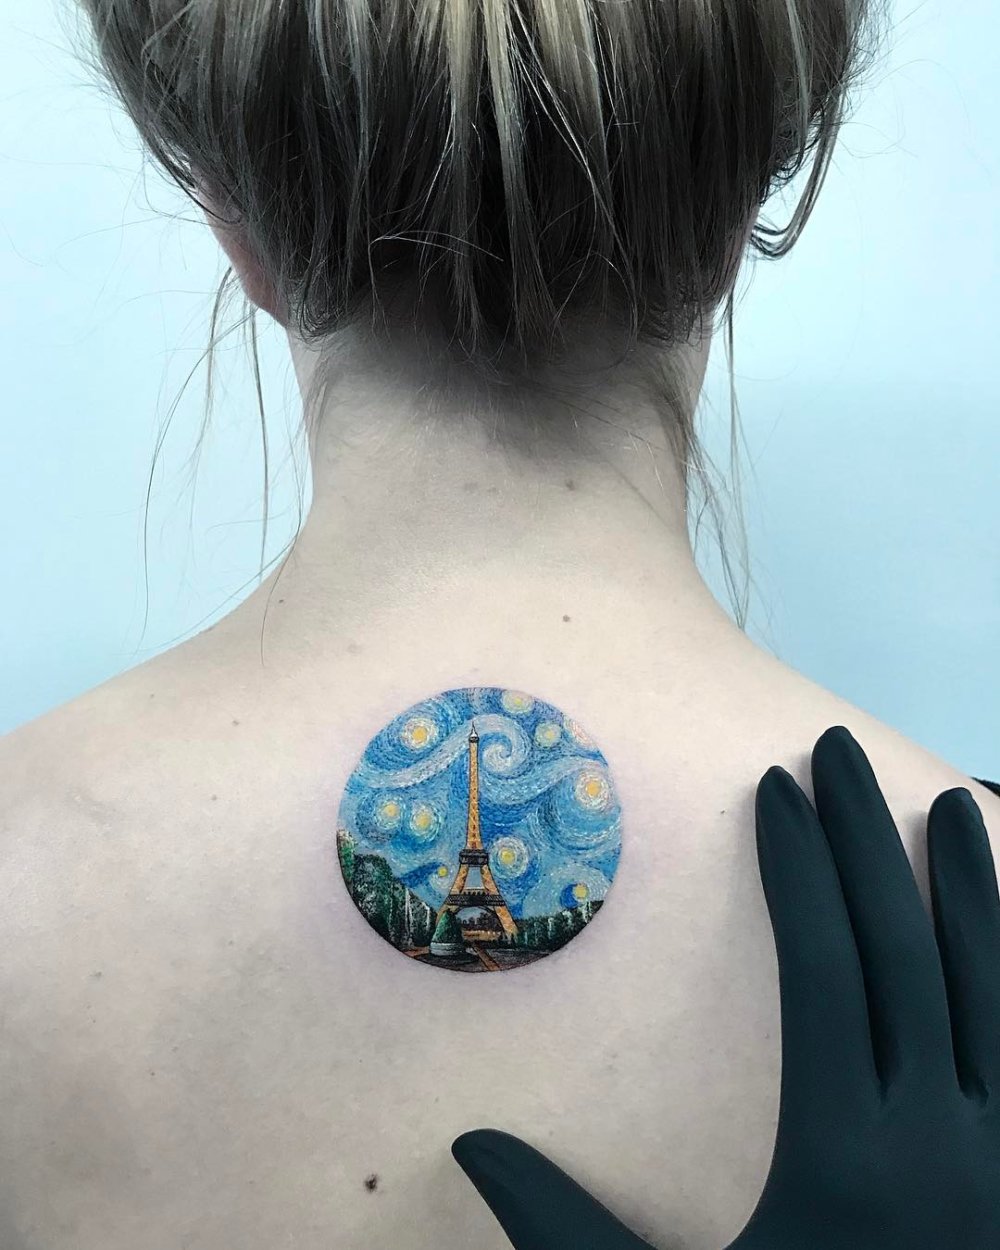 Dazzlingly Beautiful Illustration Tattoos Inside Tiny Circles By Eva Krbdk 9